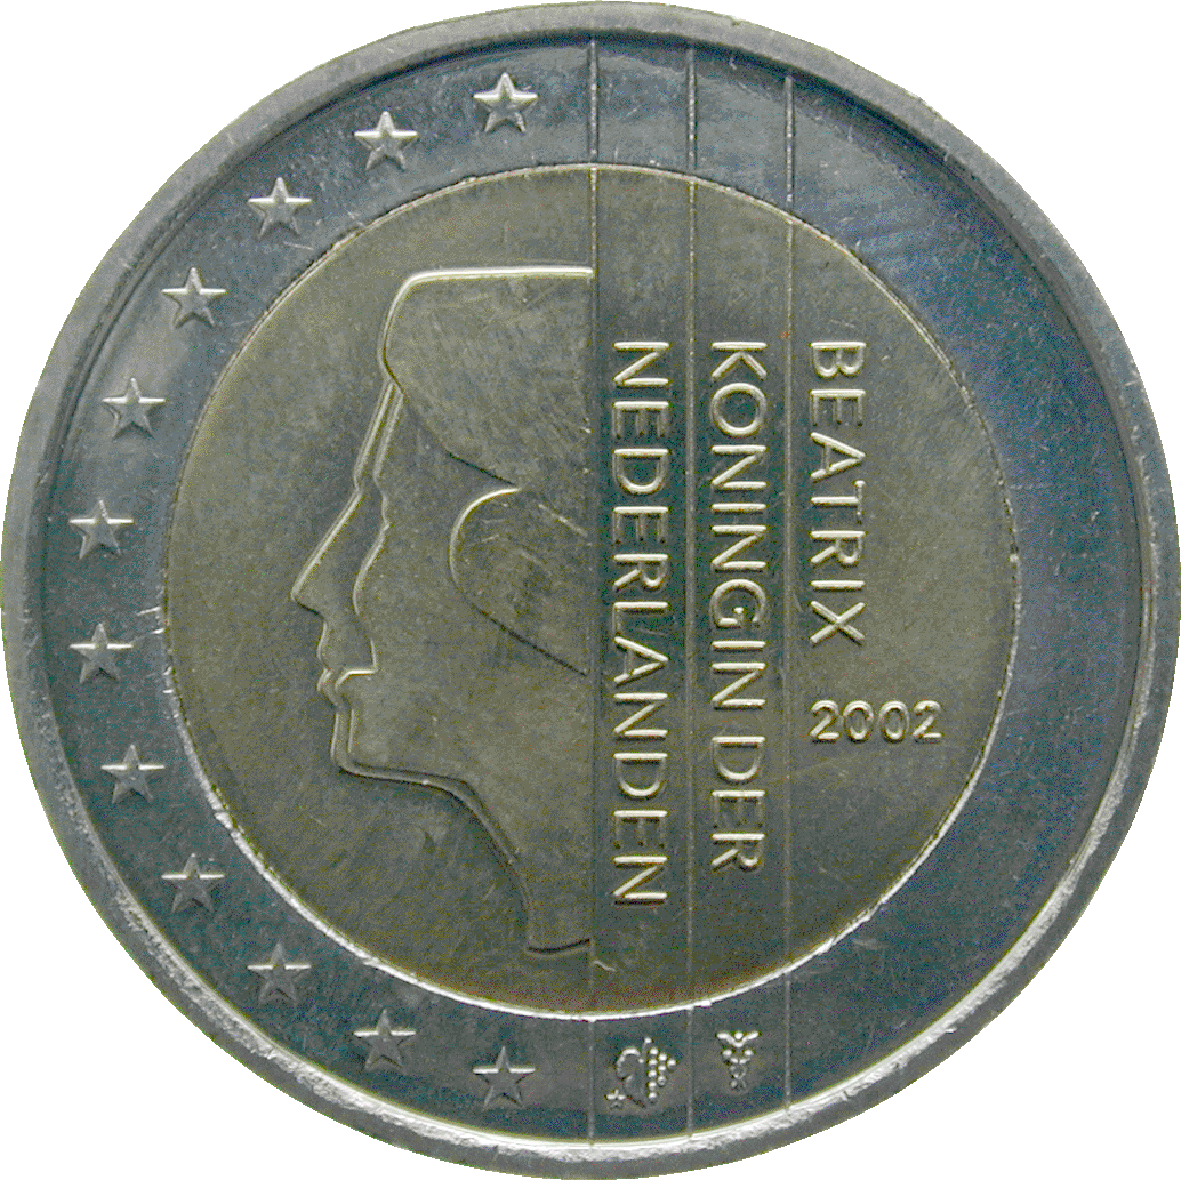 Kingdom of the Netherlands, Beatrix, 2 Euro 2002 (reverse)